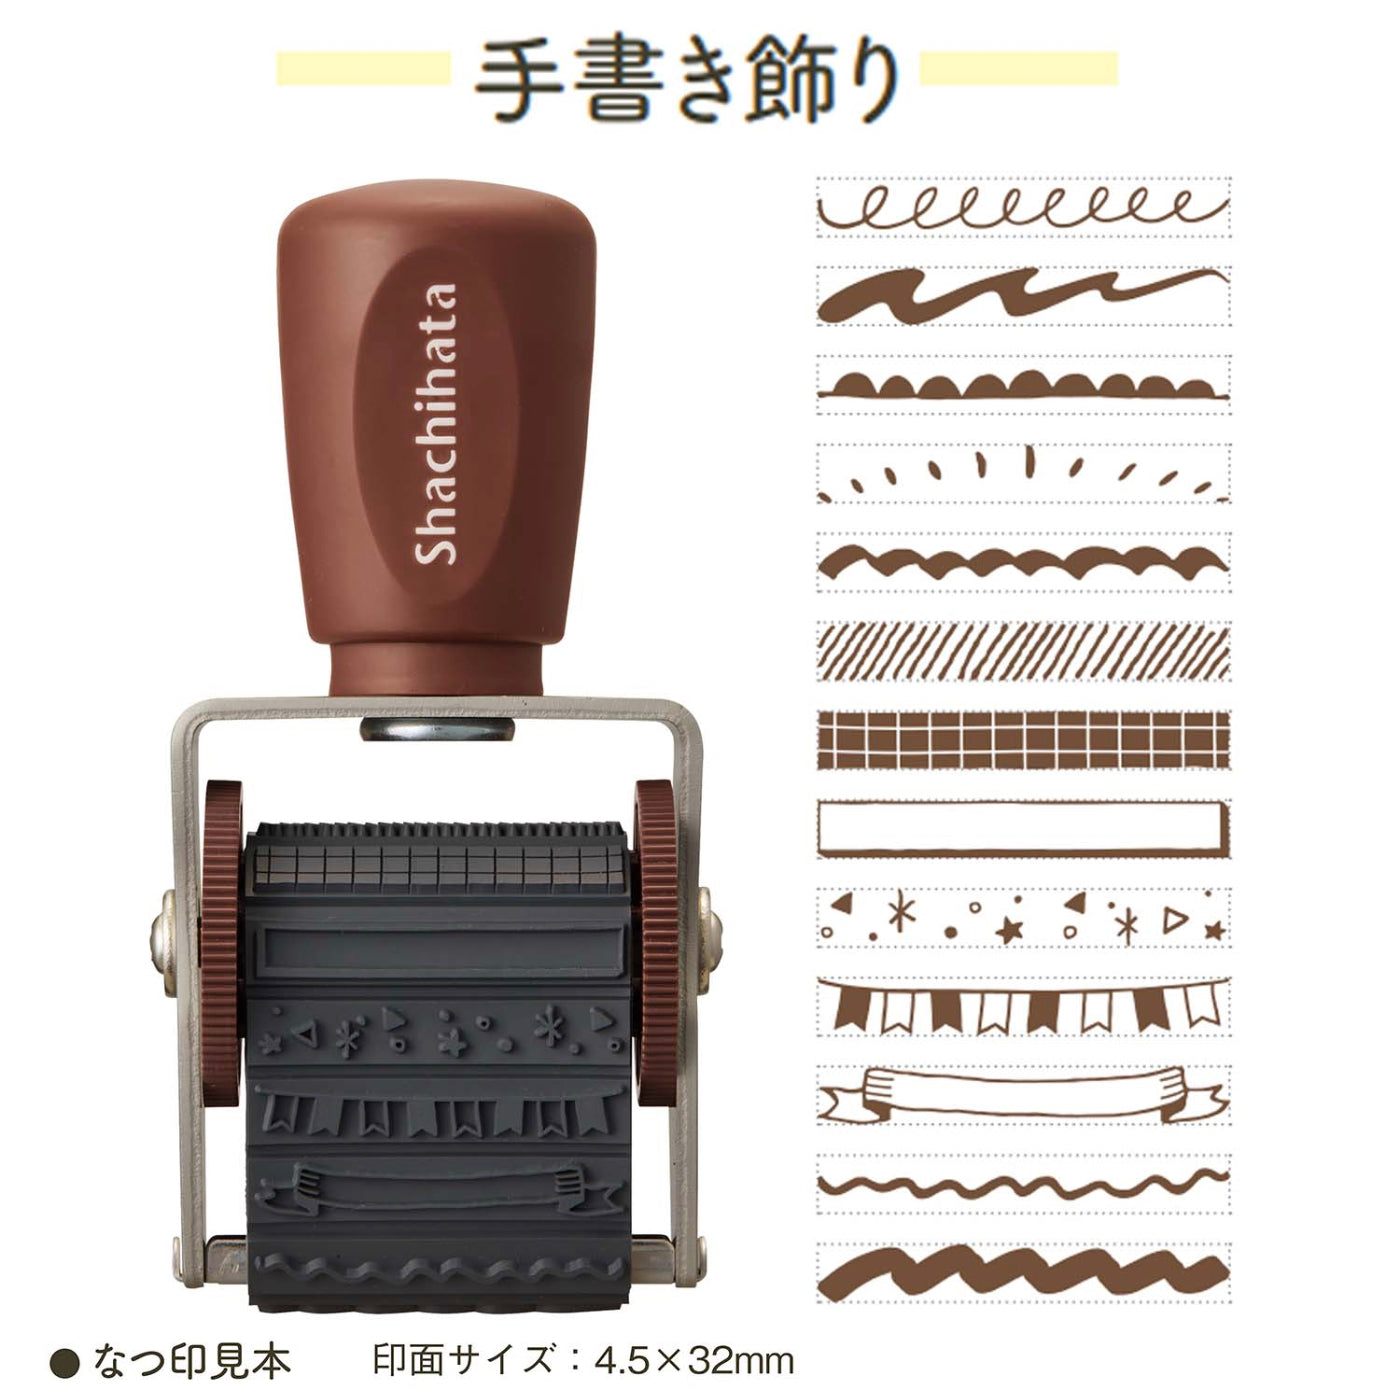 Shachihata Perpetual Calendar Stamp - Japanese – Yoseka